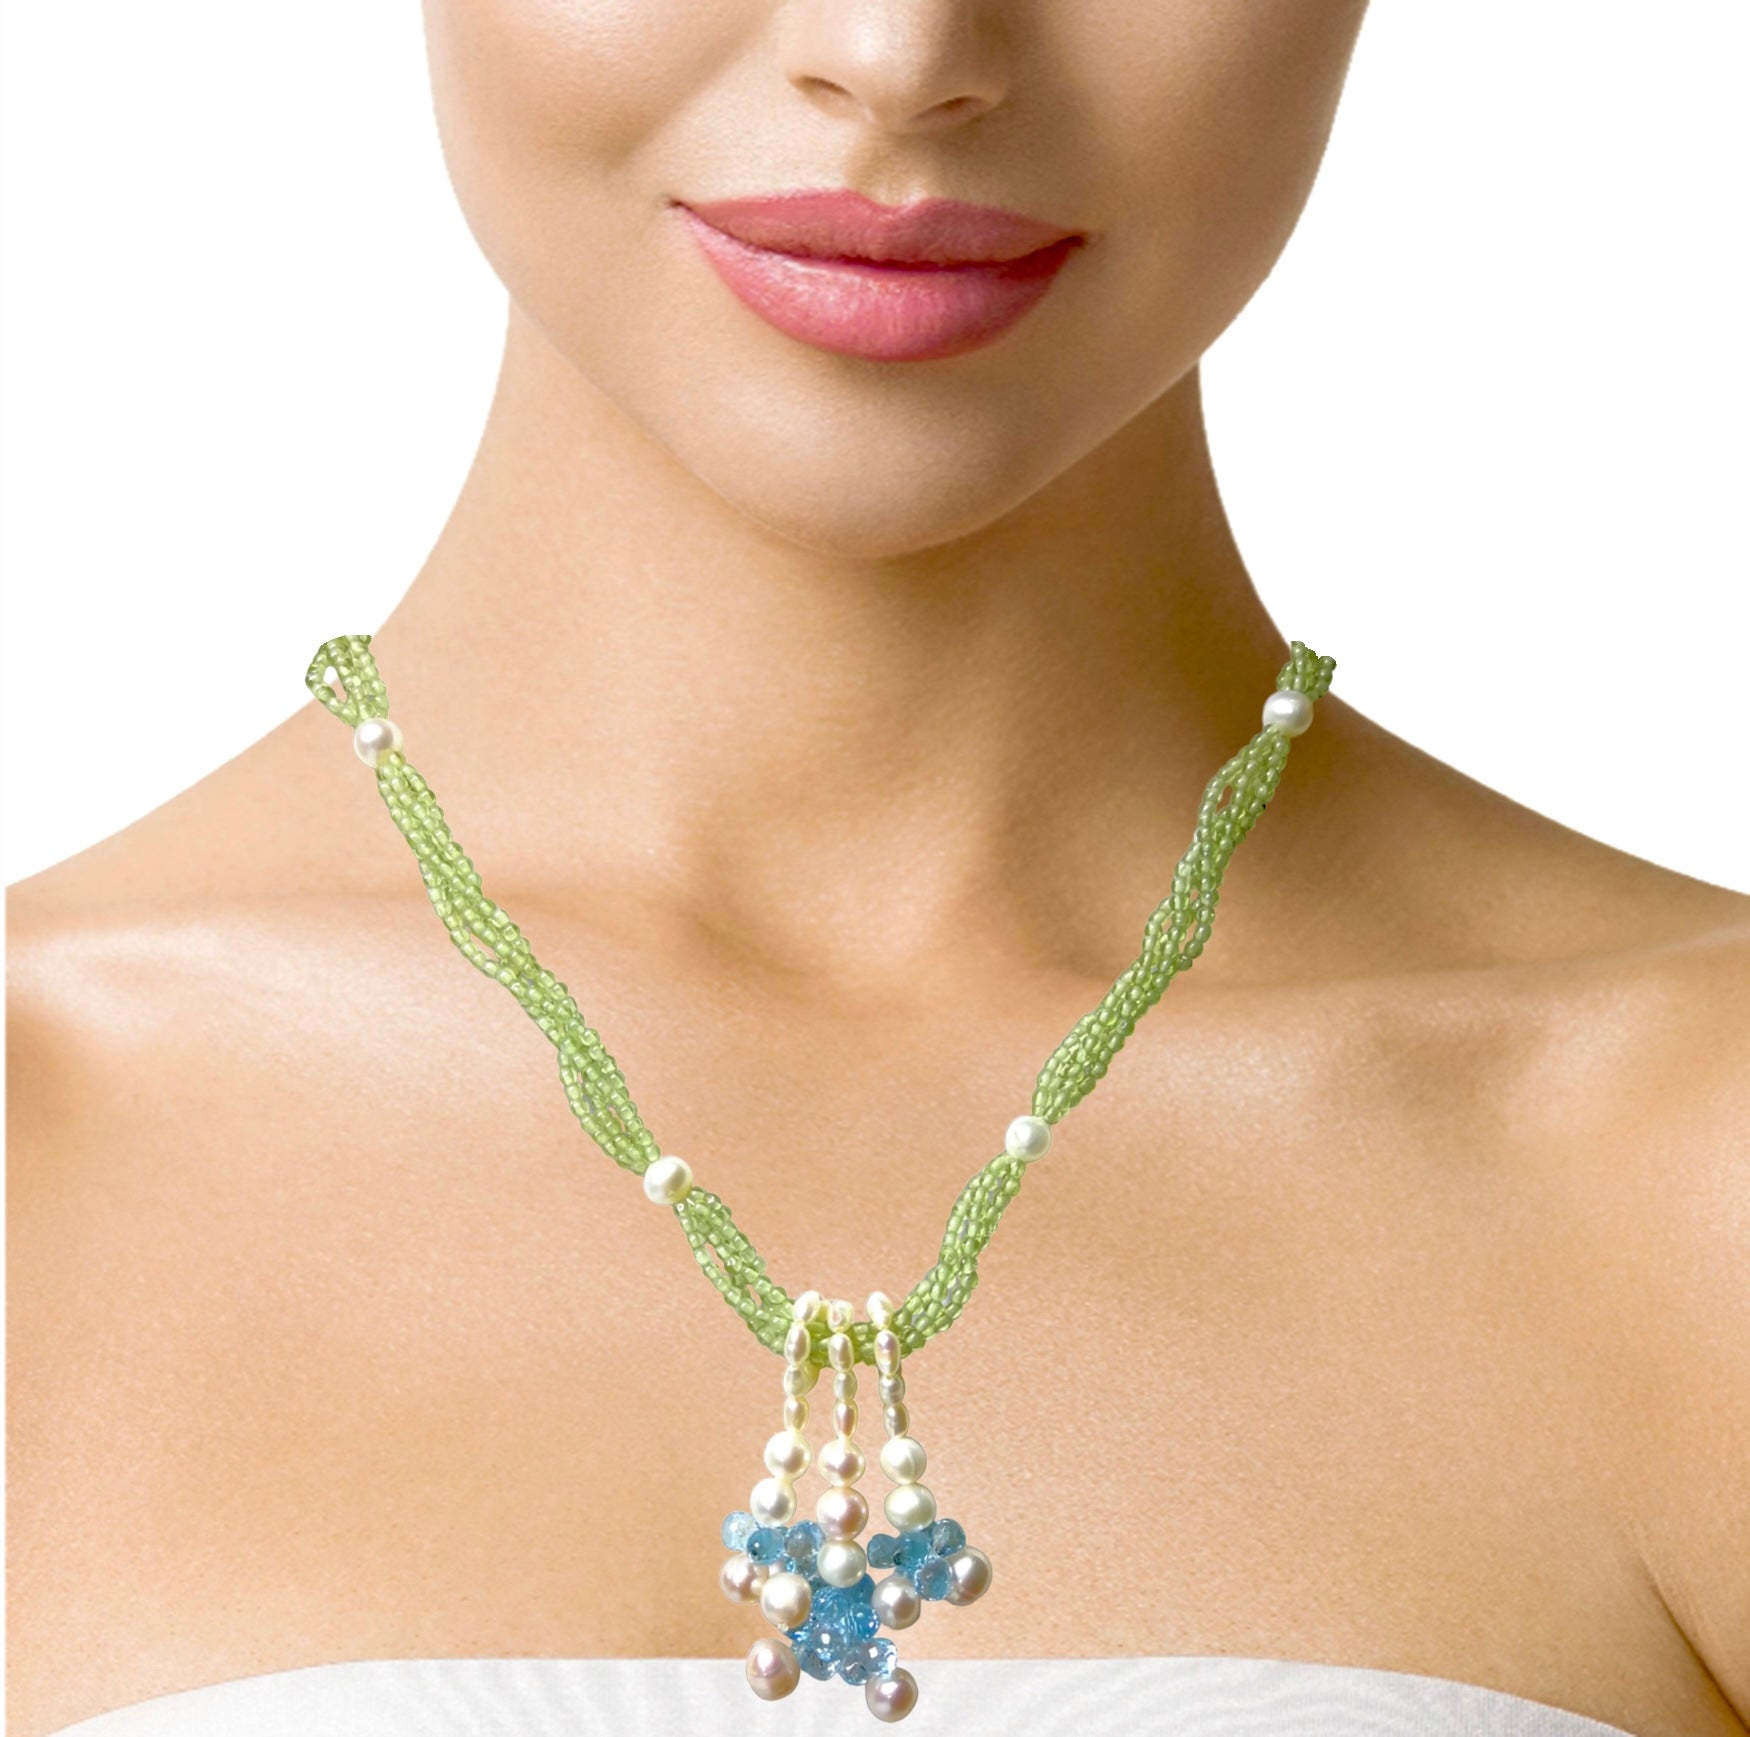 Natural Handmade Necklace 16"-18" Peridot, Blue Topaz, Pearls Gemstone Beads Jewellery